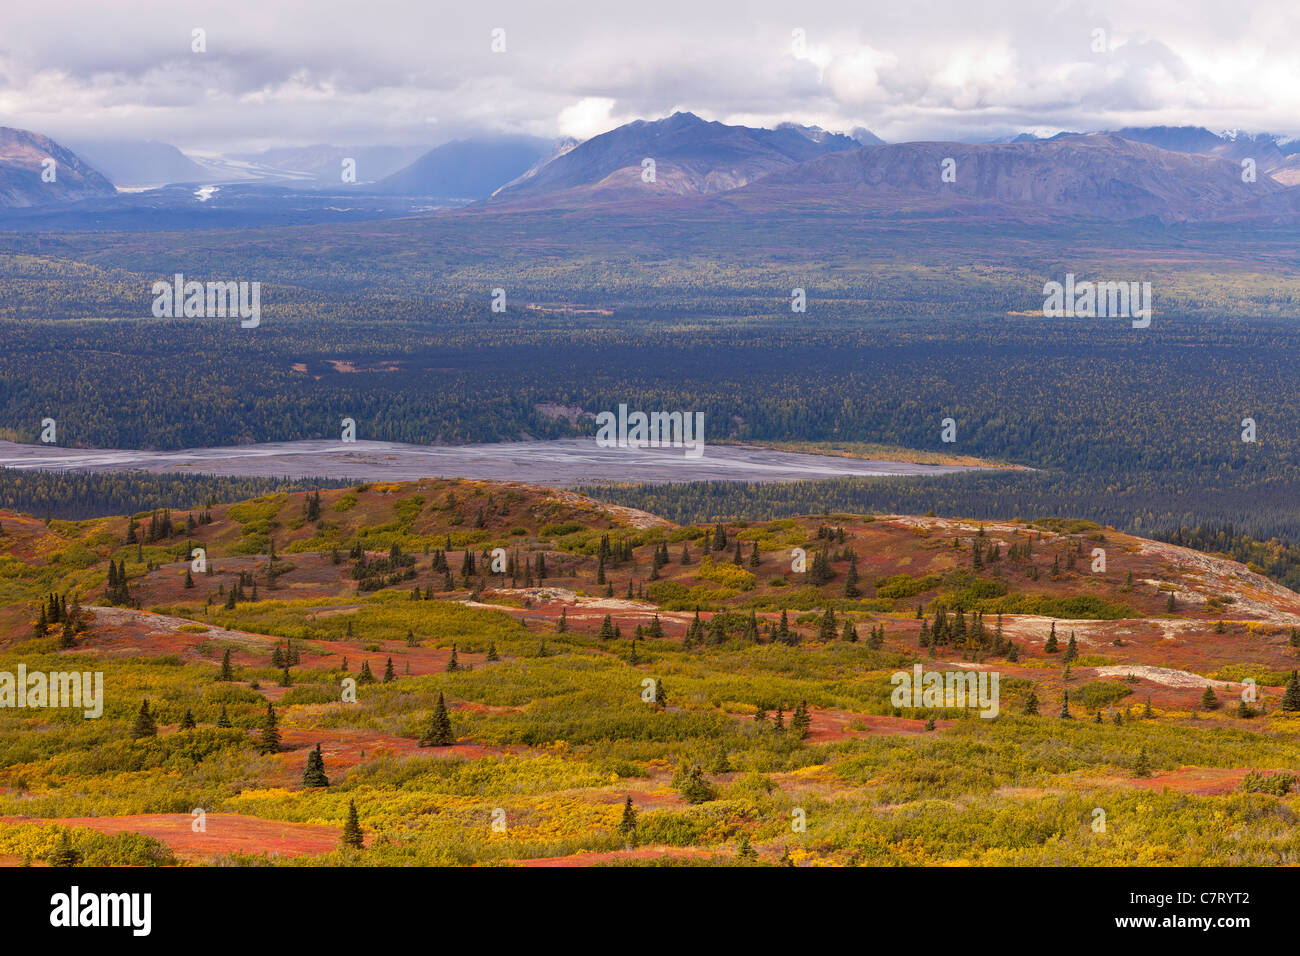 DENALI STATE PARK, ALASKA, USA - Kesugi Ridge Herbst Tundra. Chulitna Flusstal in Ferne. Stockfoto